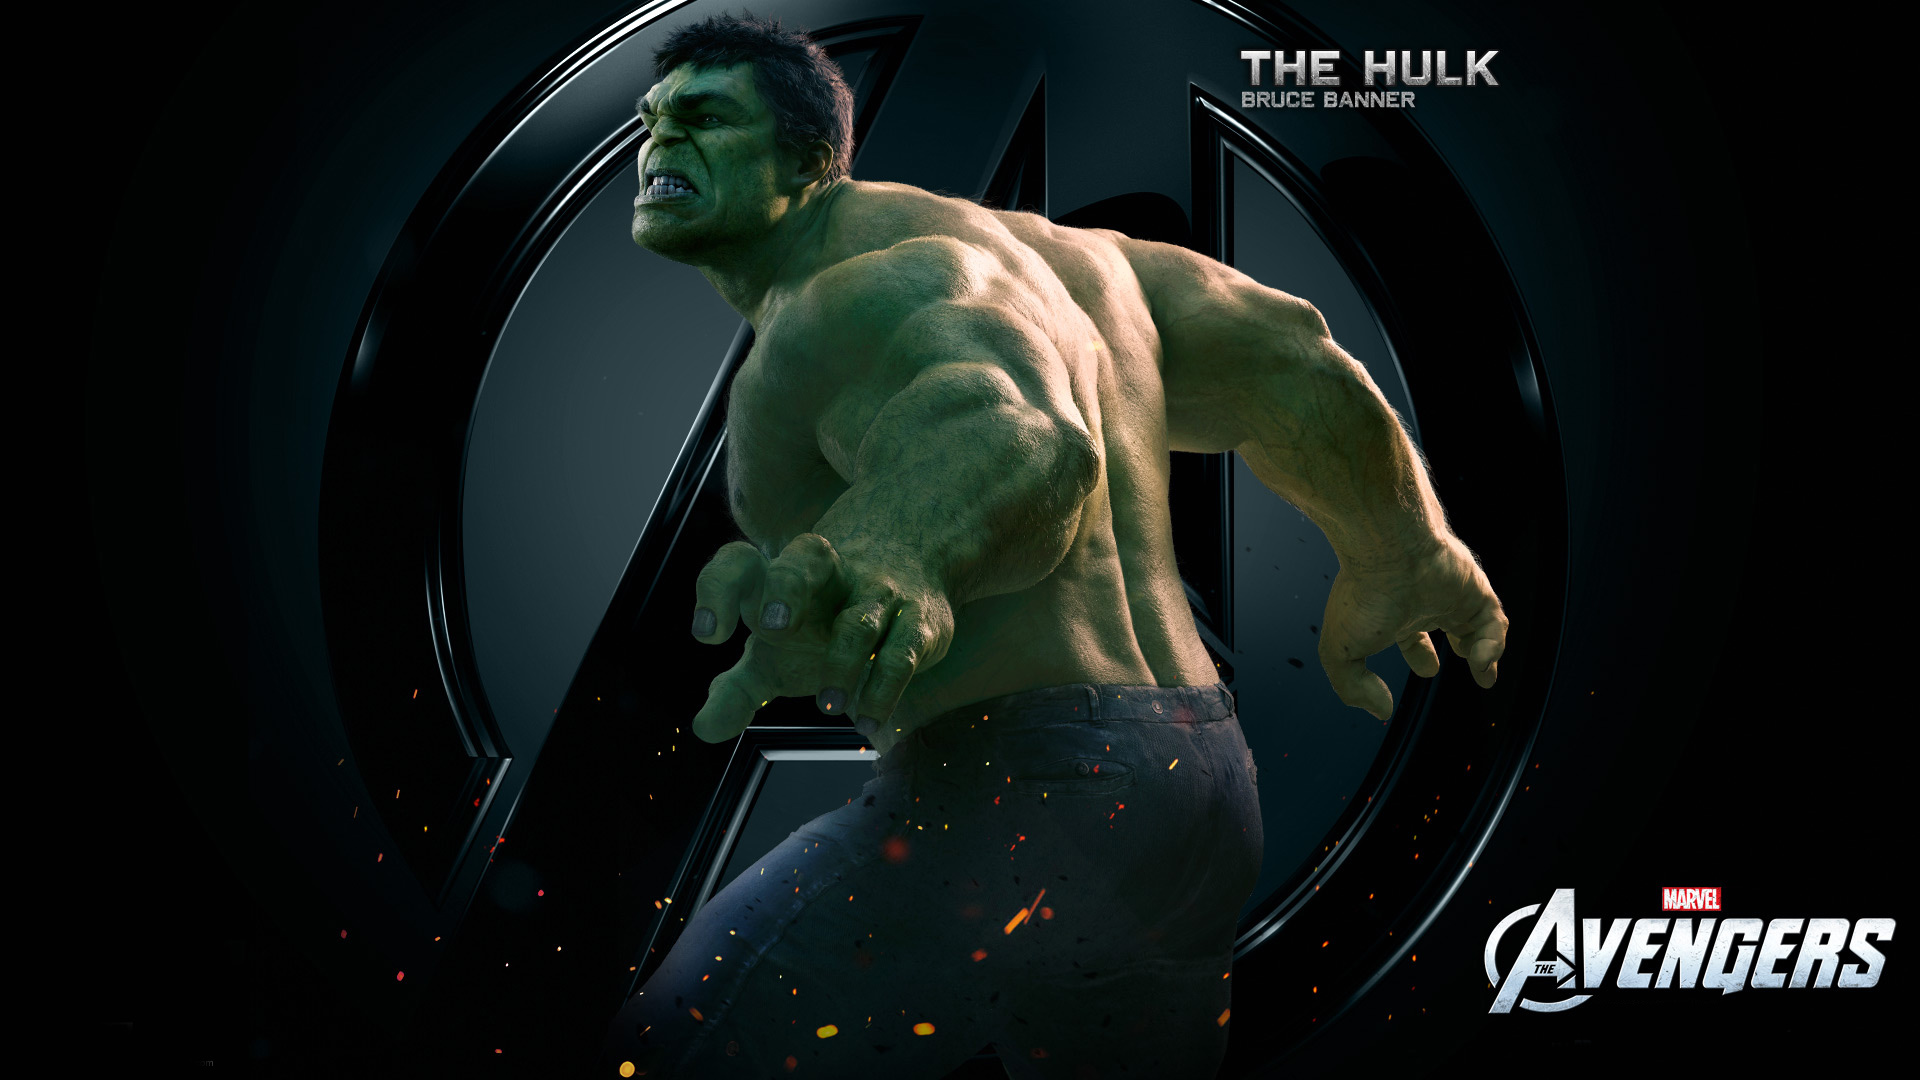 Avengers Movie Poster - HD Wallpaper 